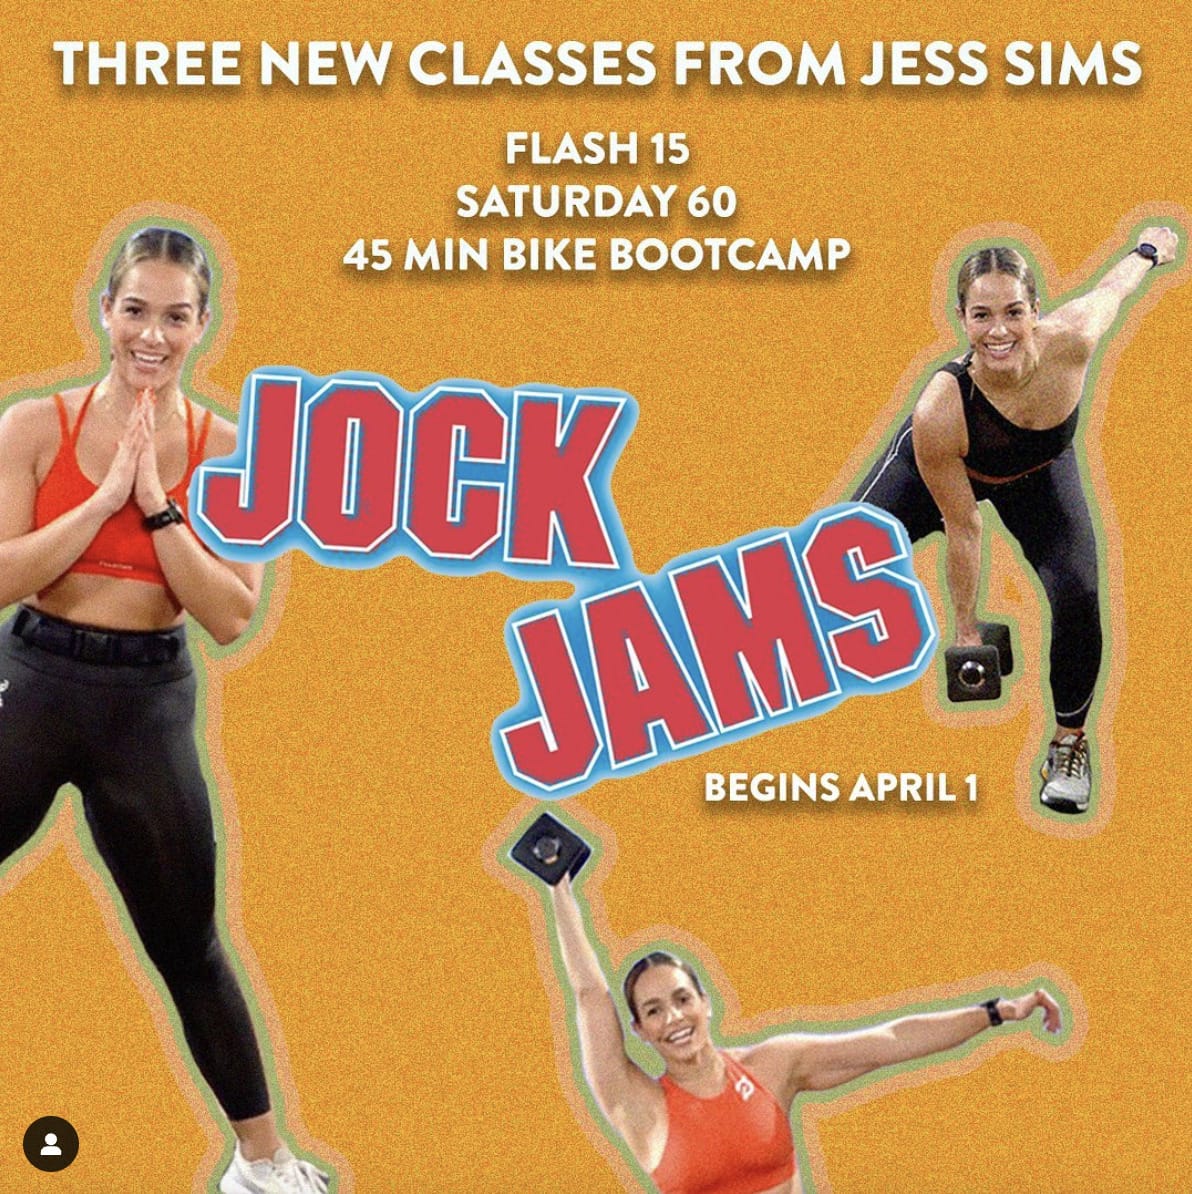 Jess Sims Jock Jams Announcement. Image credit Jess Sims social media.